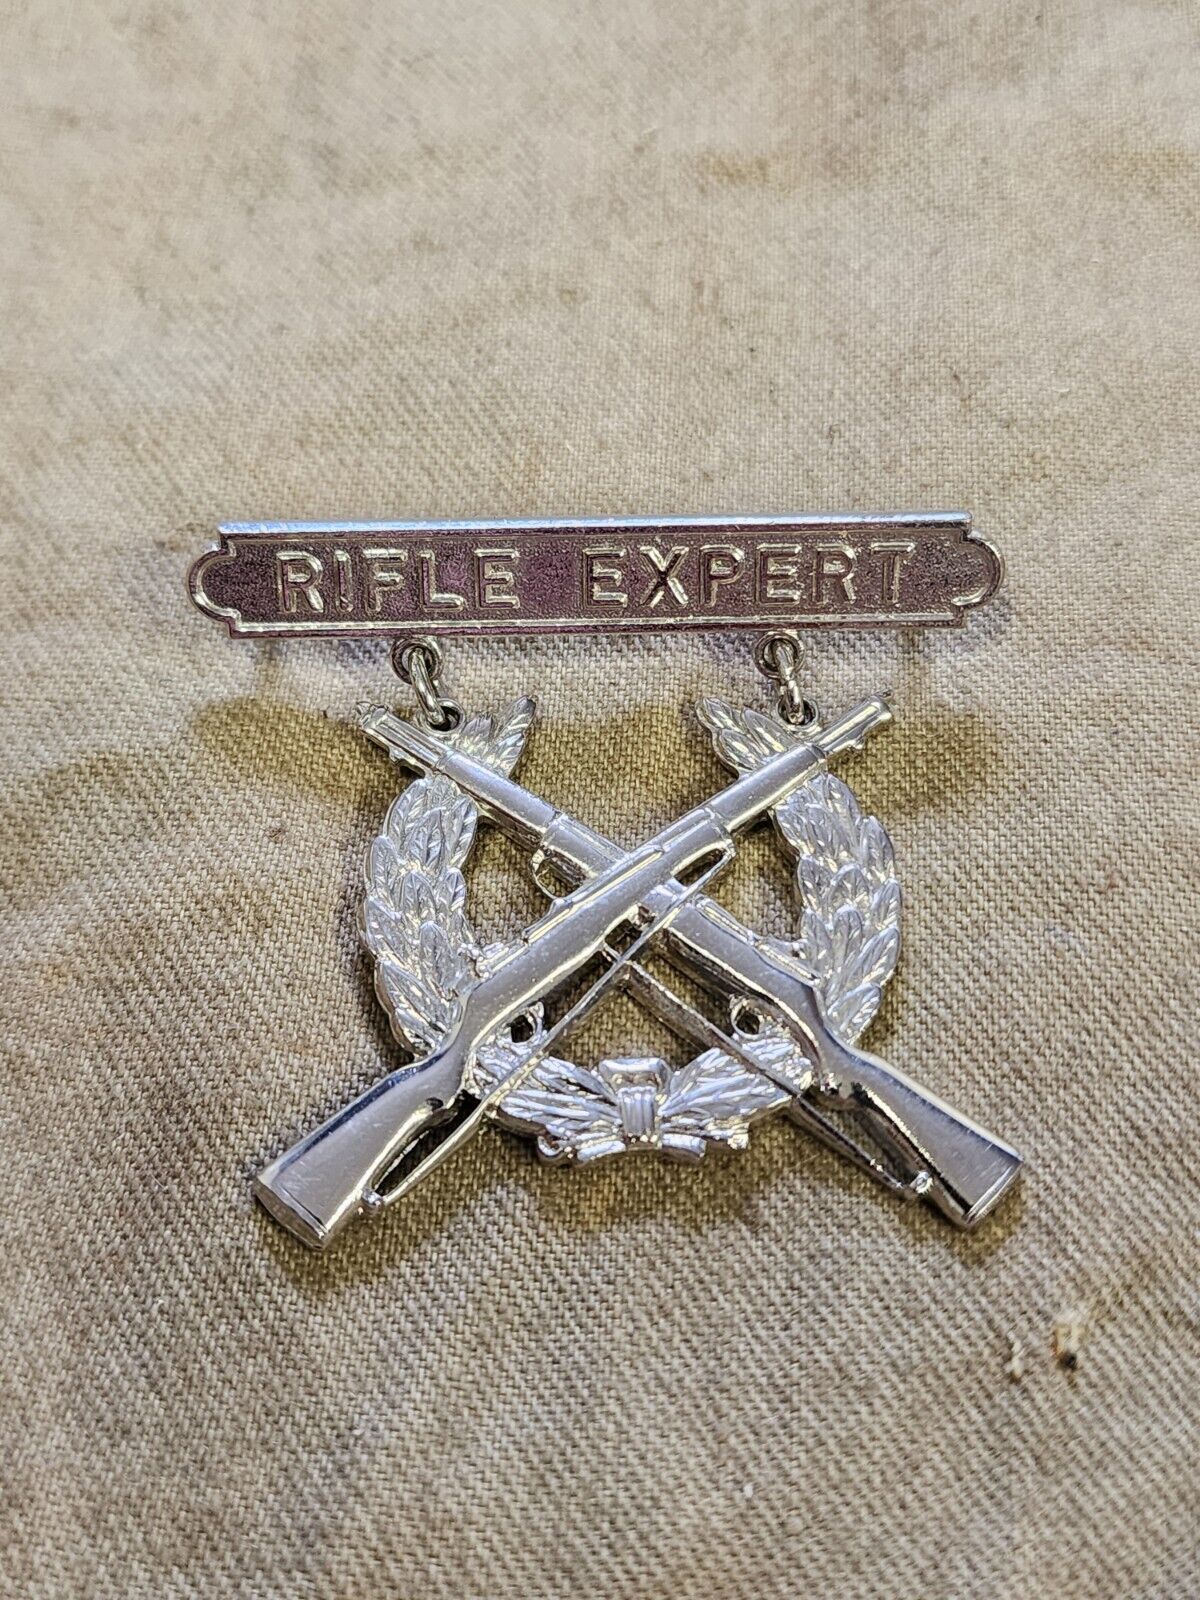 POST WWII USMC Marine Corps Rifle Expert Marksman Badge Pin